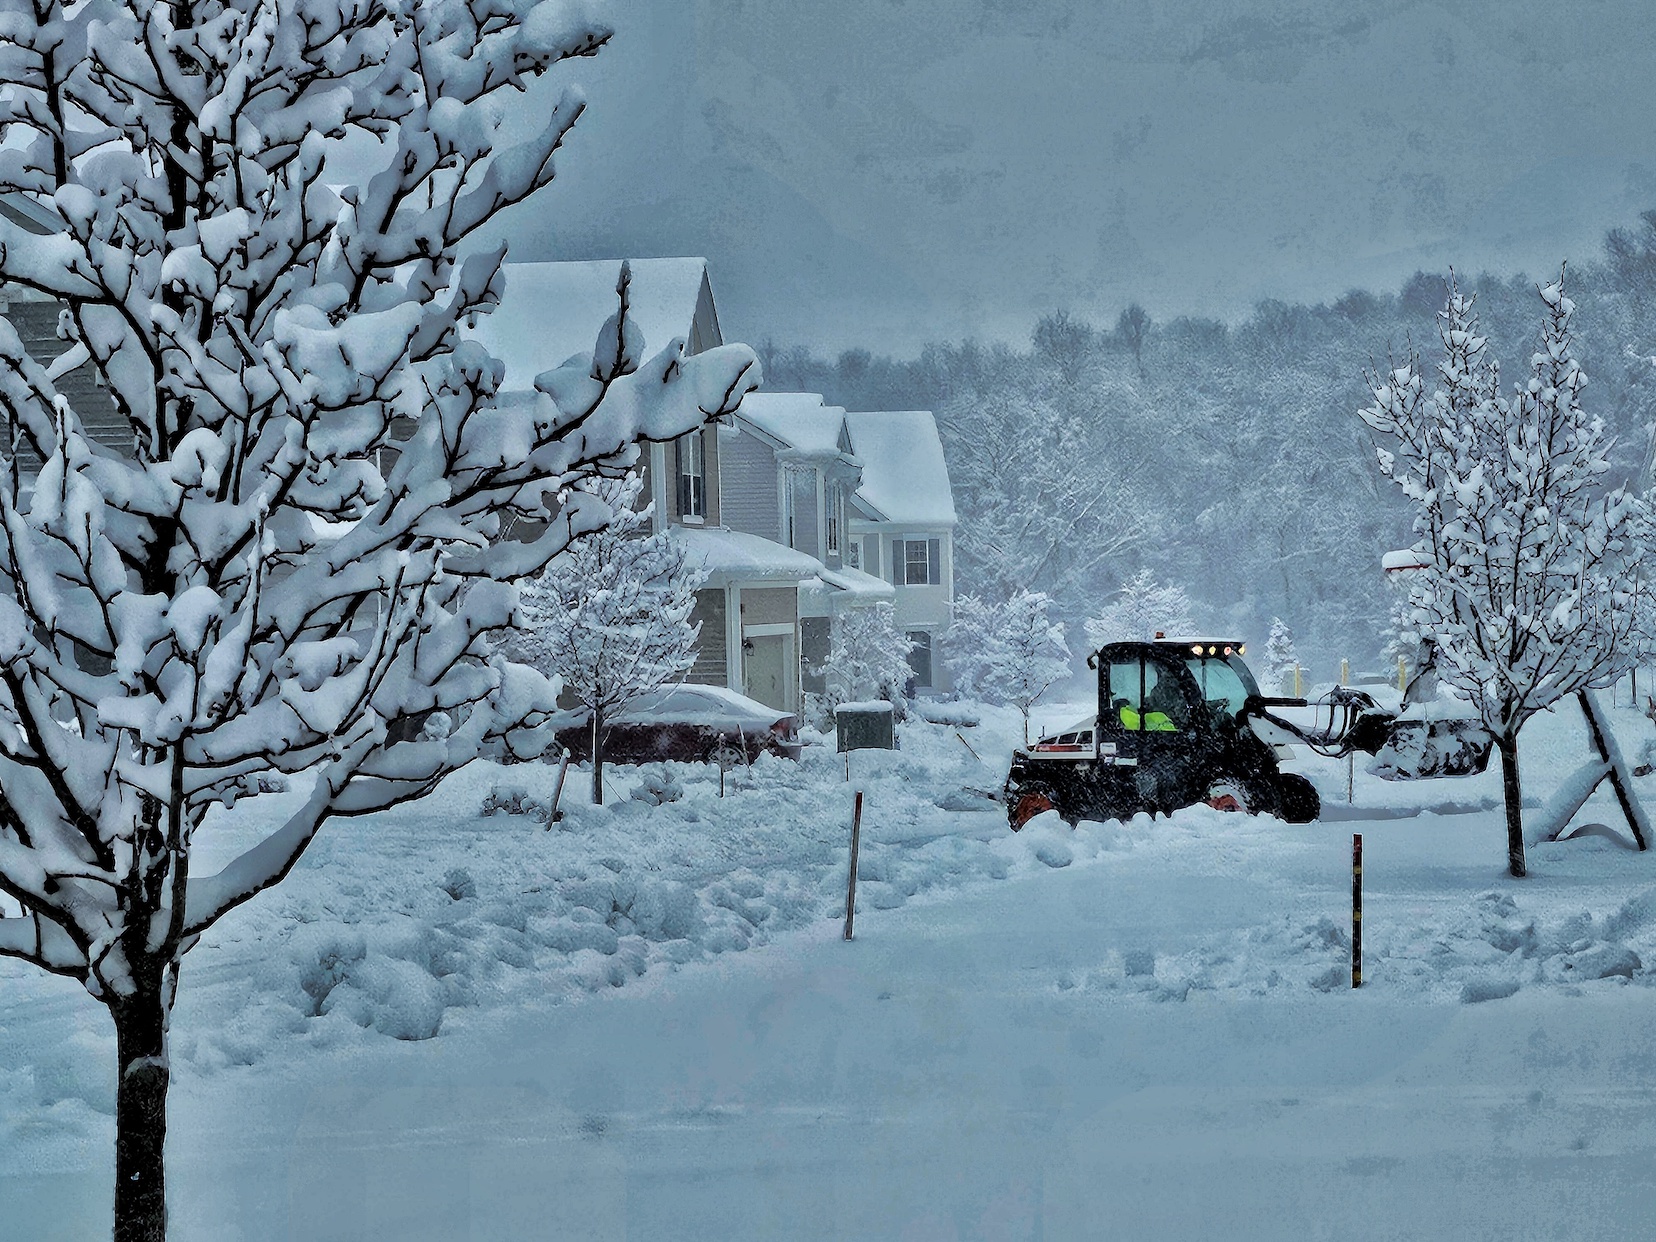 Photos: Snowstorm hits Hopkinton